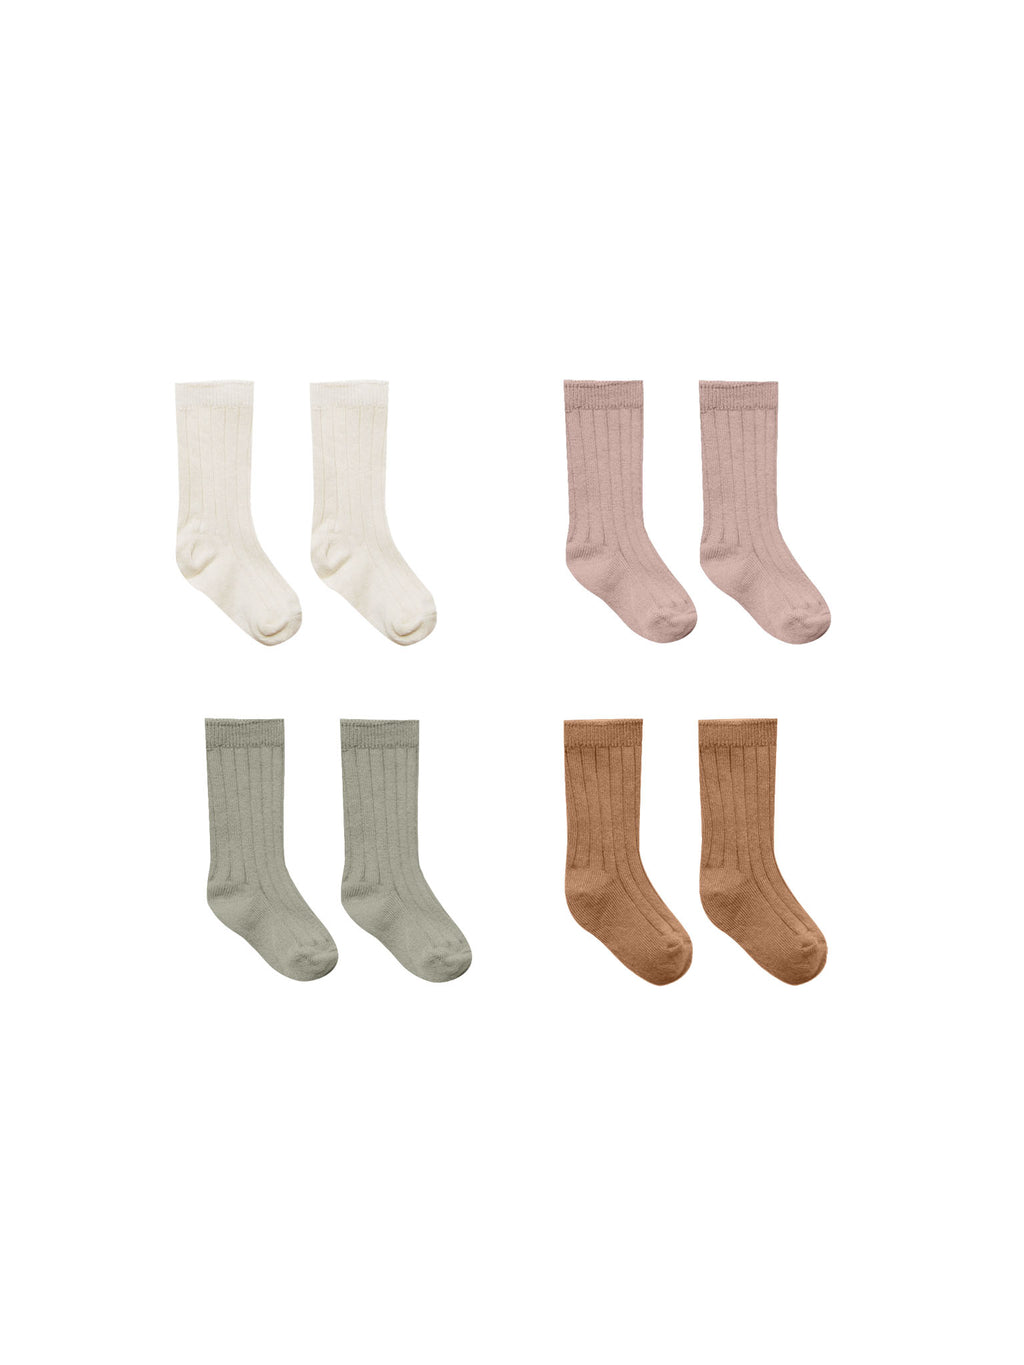 Quincy Mae Socks, Set Of 4 - Natural, Mauve, Basil, Cinnamon